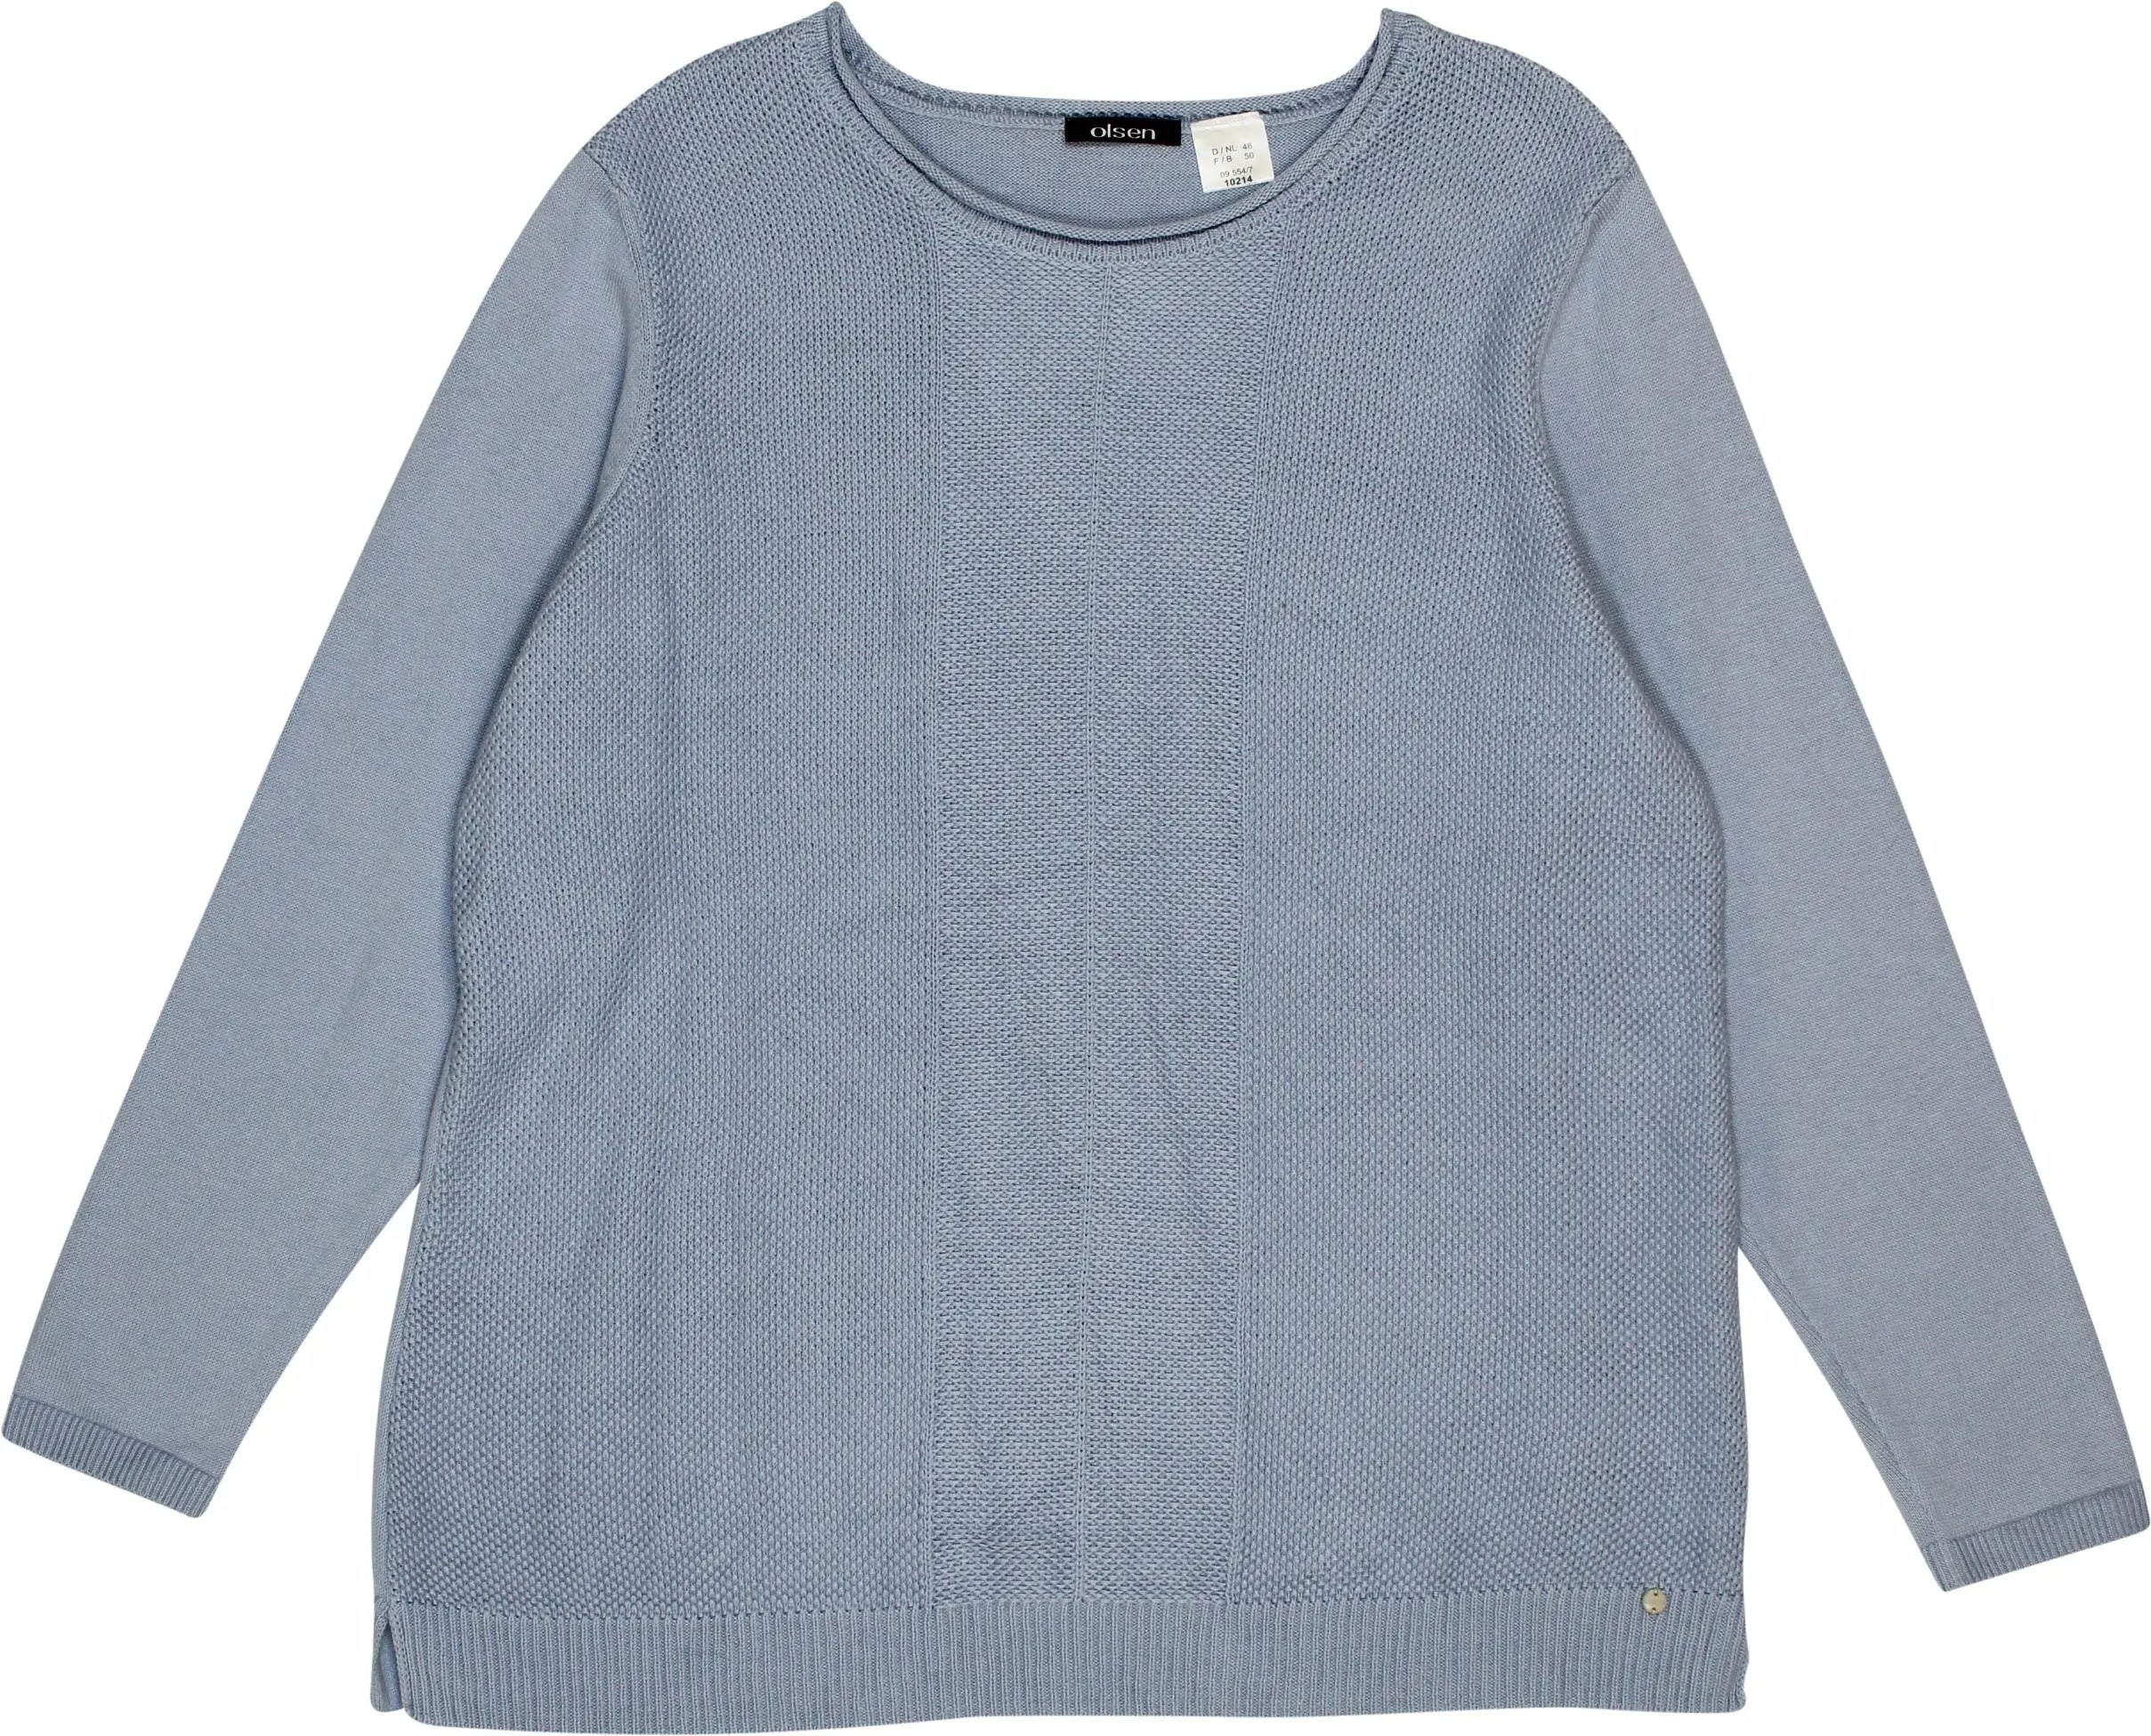 Olsen - Blue Knitted Jumper- ThriftTale.com - Vintage and second handclothing